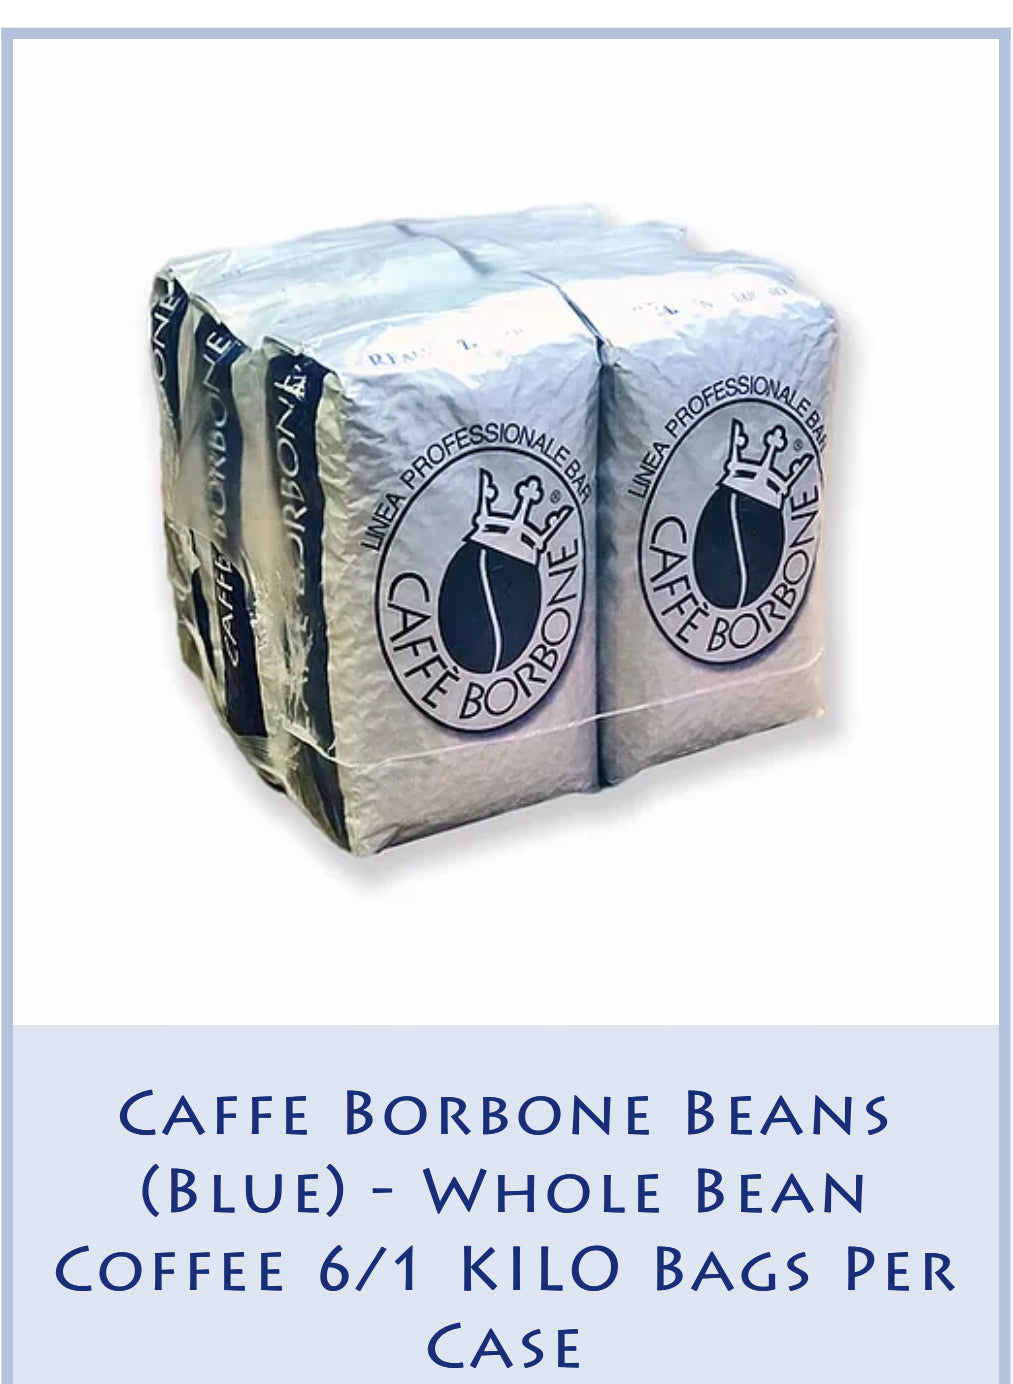 Caffe Borbone Beans (Blue) - Whole Bean Coffee 6/1 KILO Bags Per Case